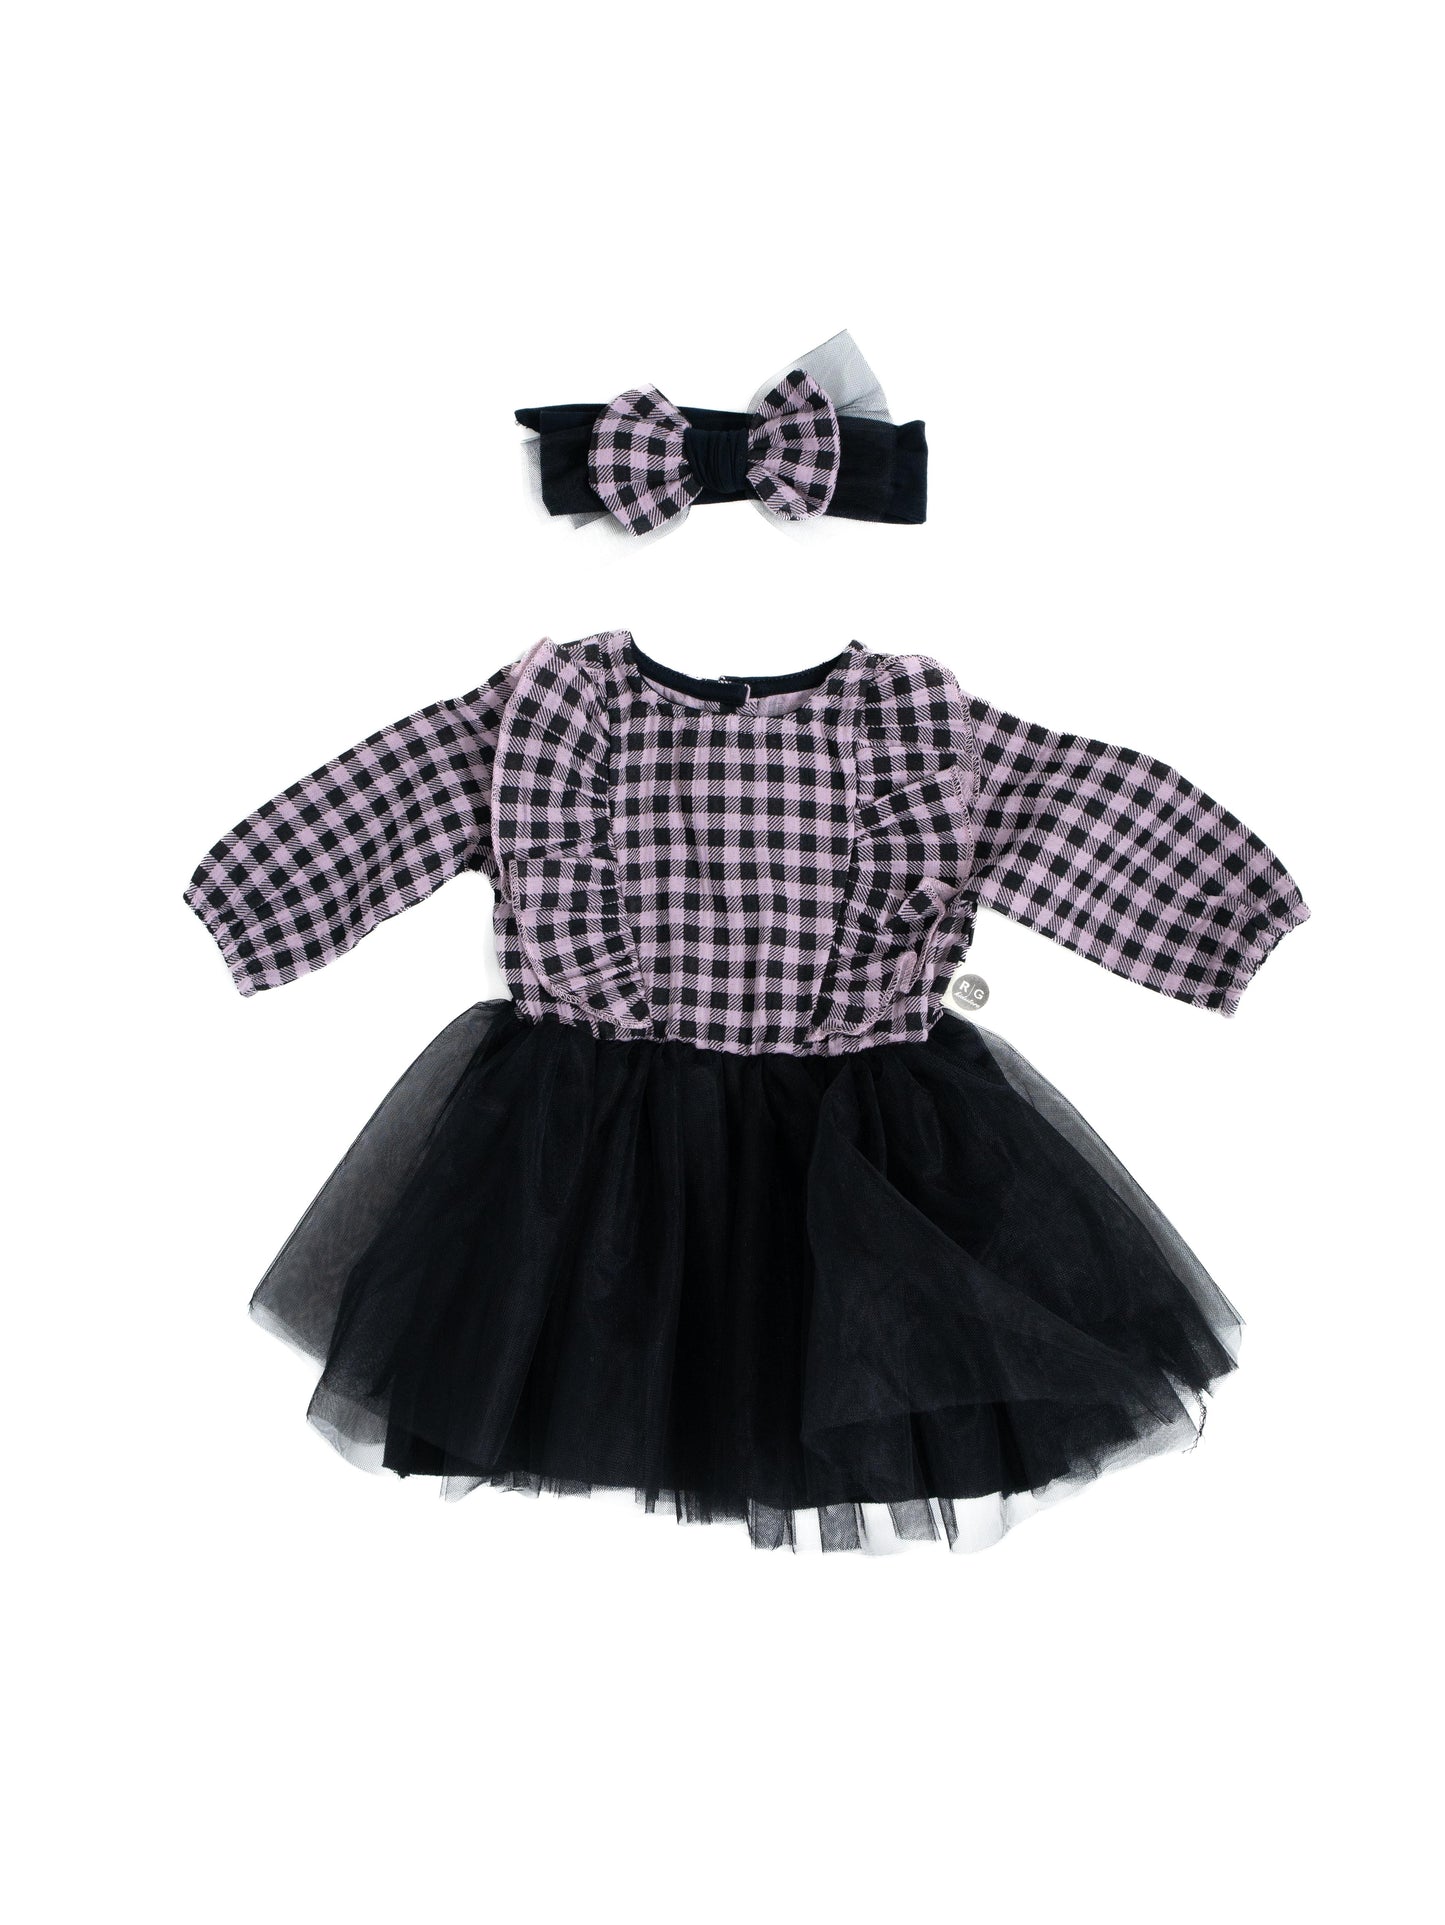 Baby Party Dress 100% Organic Muslin Fabric Tulle Dress And Headband